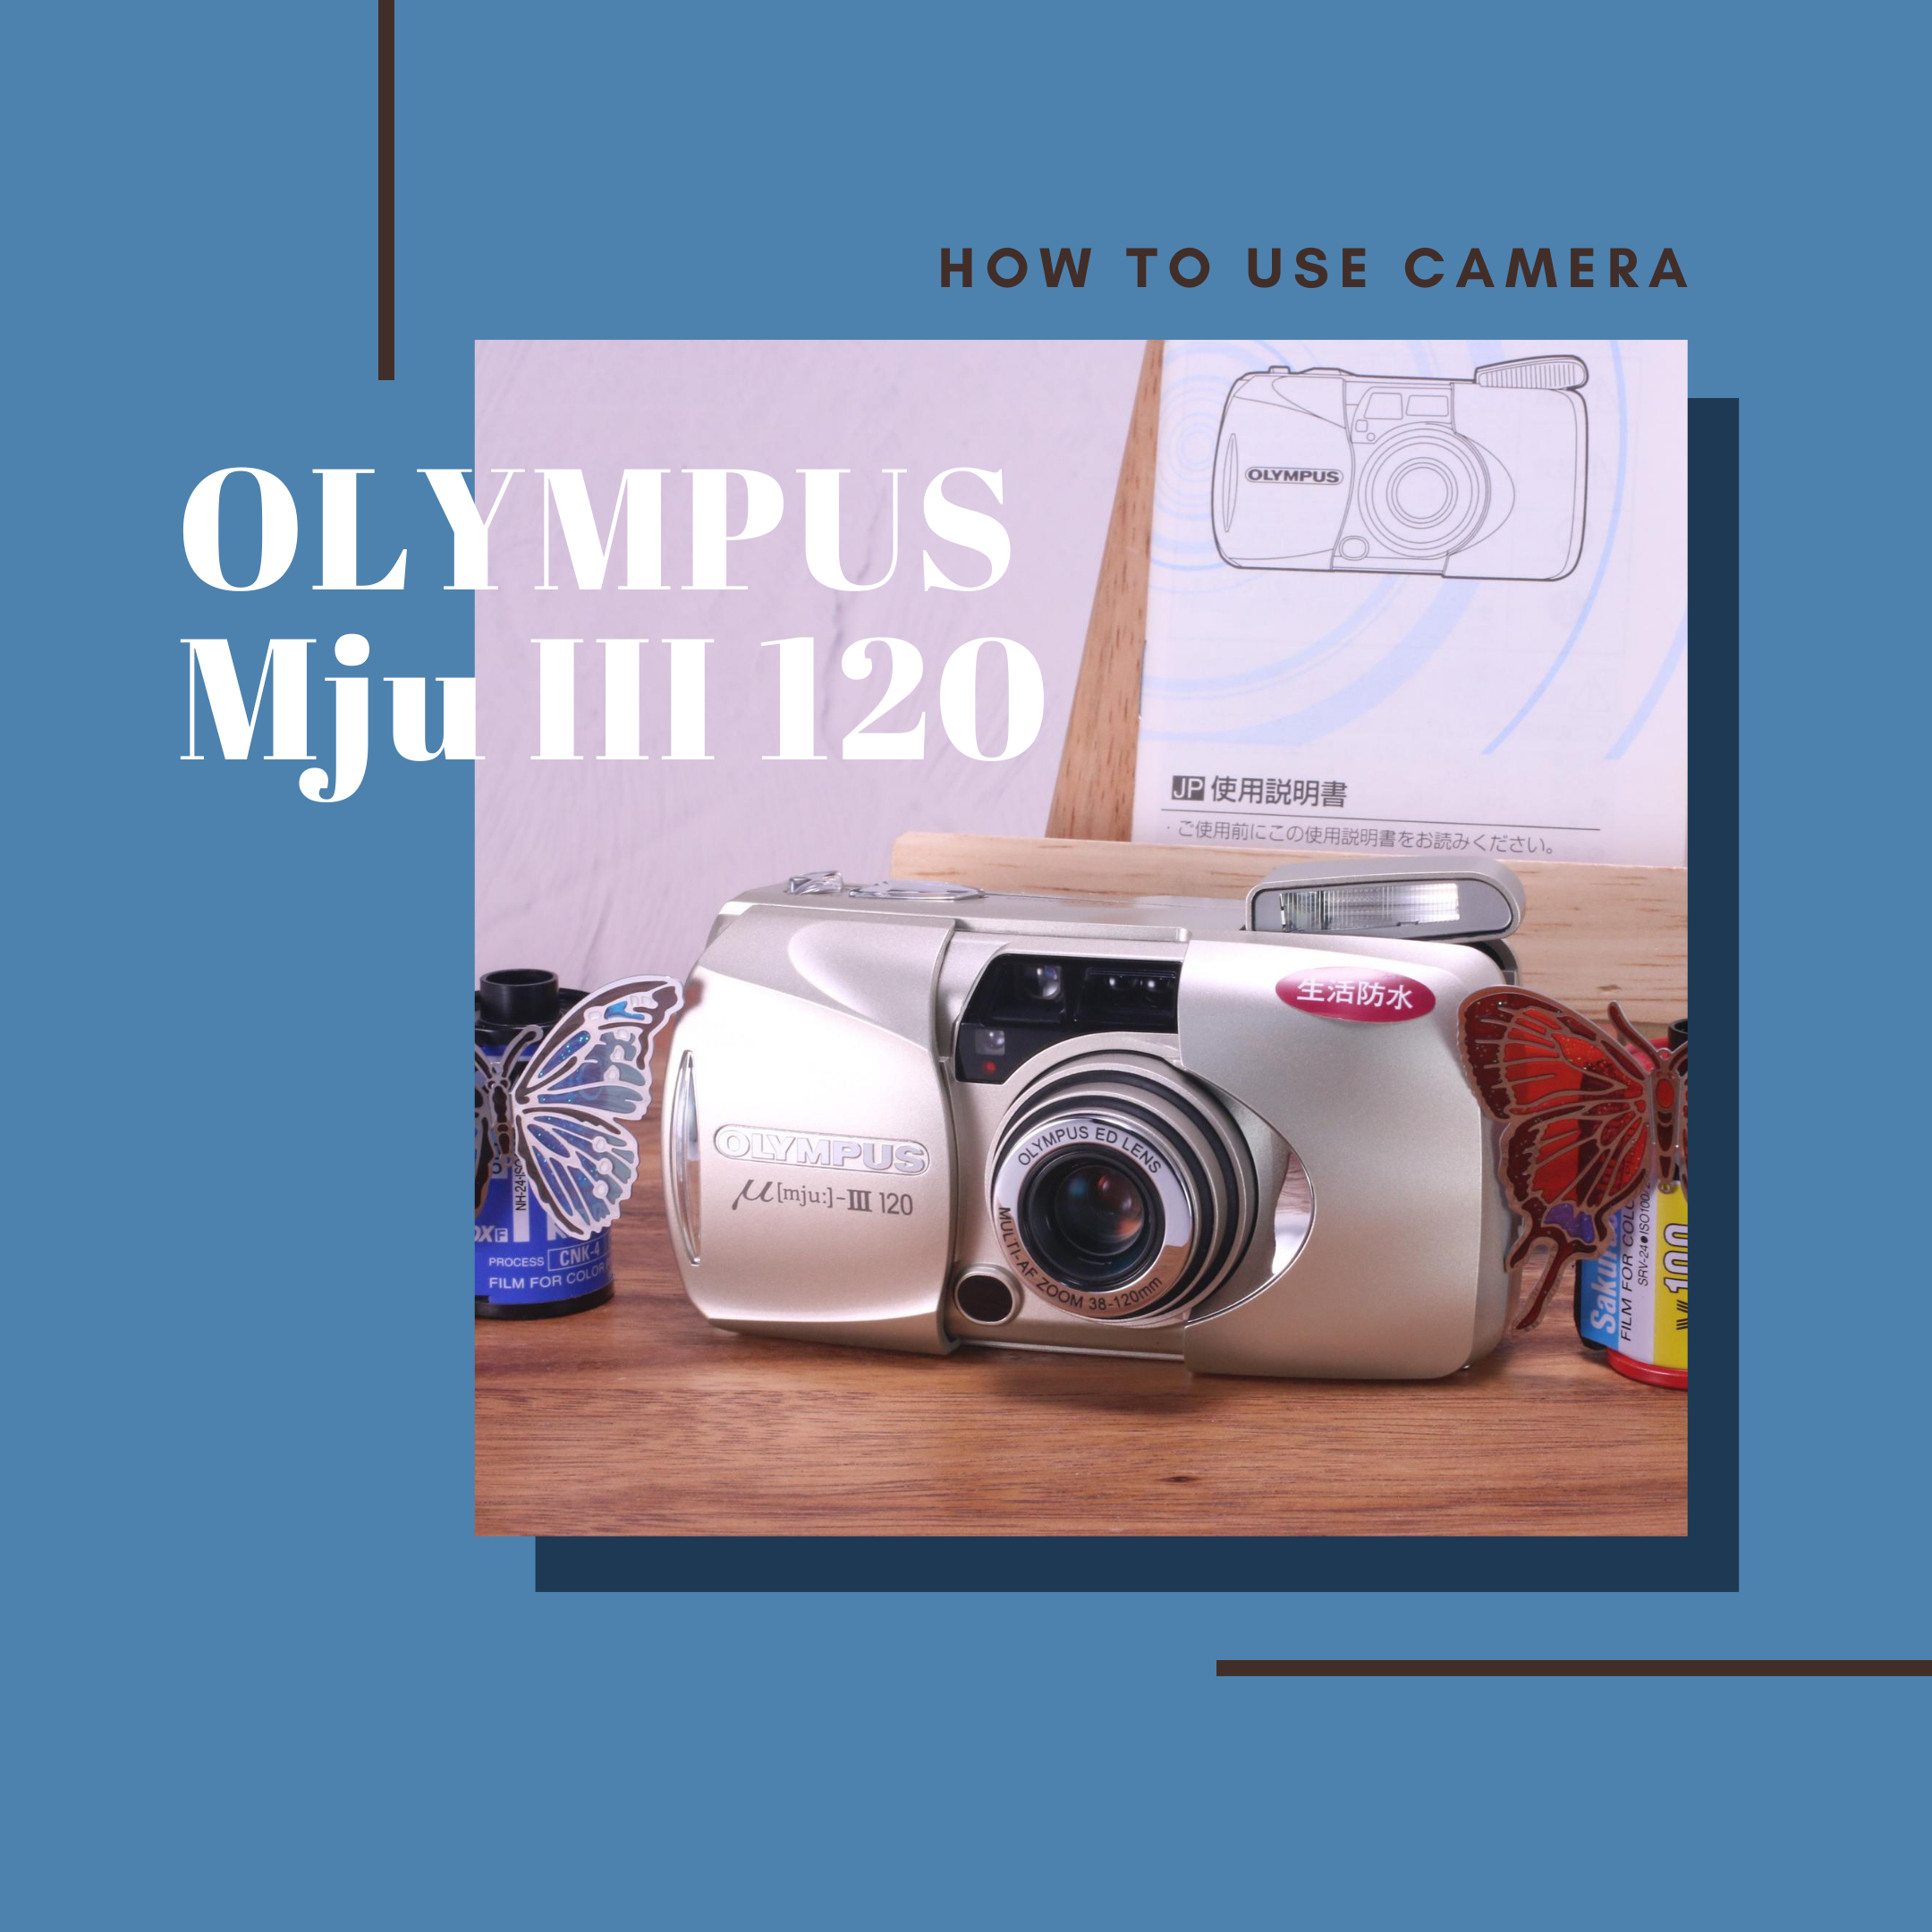 OLYMPUS μ Mju III 120 の使い方 | Totte Me Camera